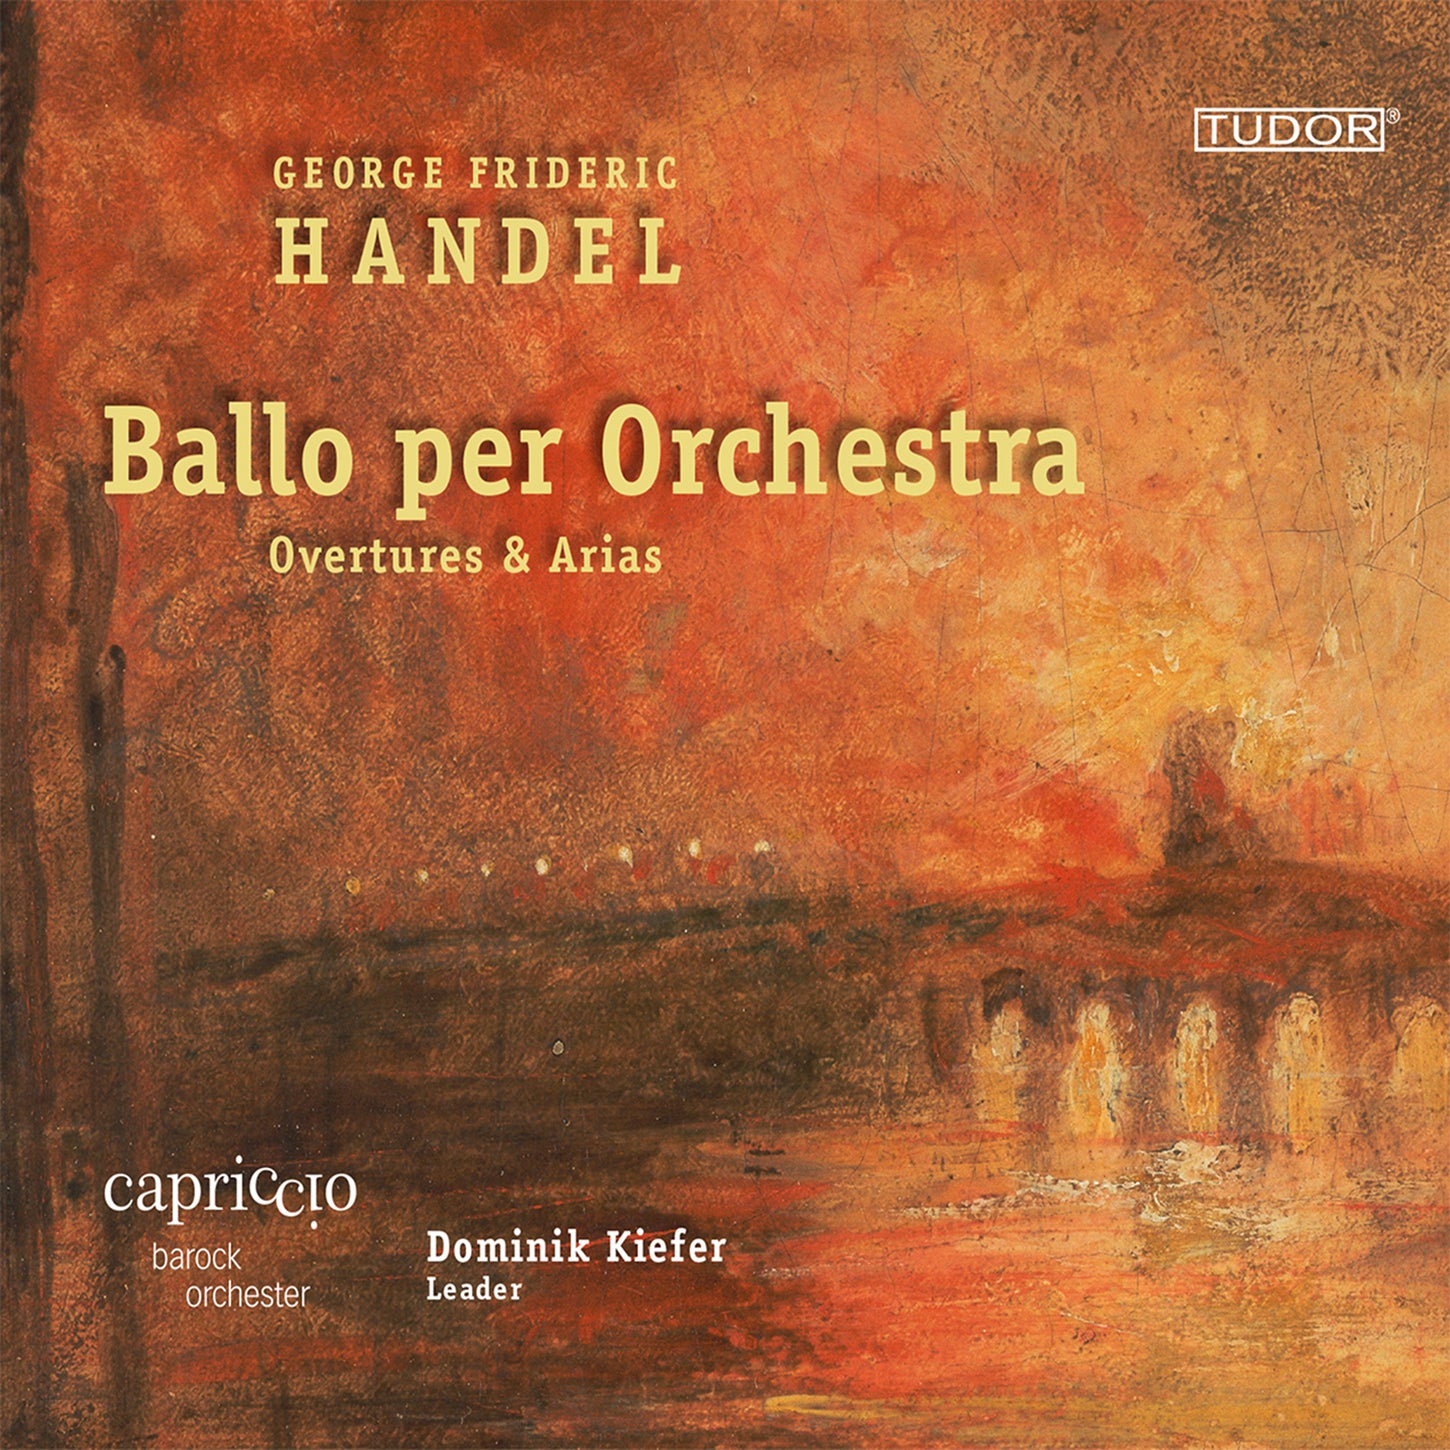 Handel: Ballo per Orchestra - Overtures & Arias / Capriccio Baroque Orchestra